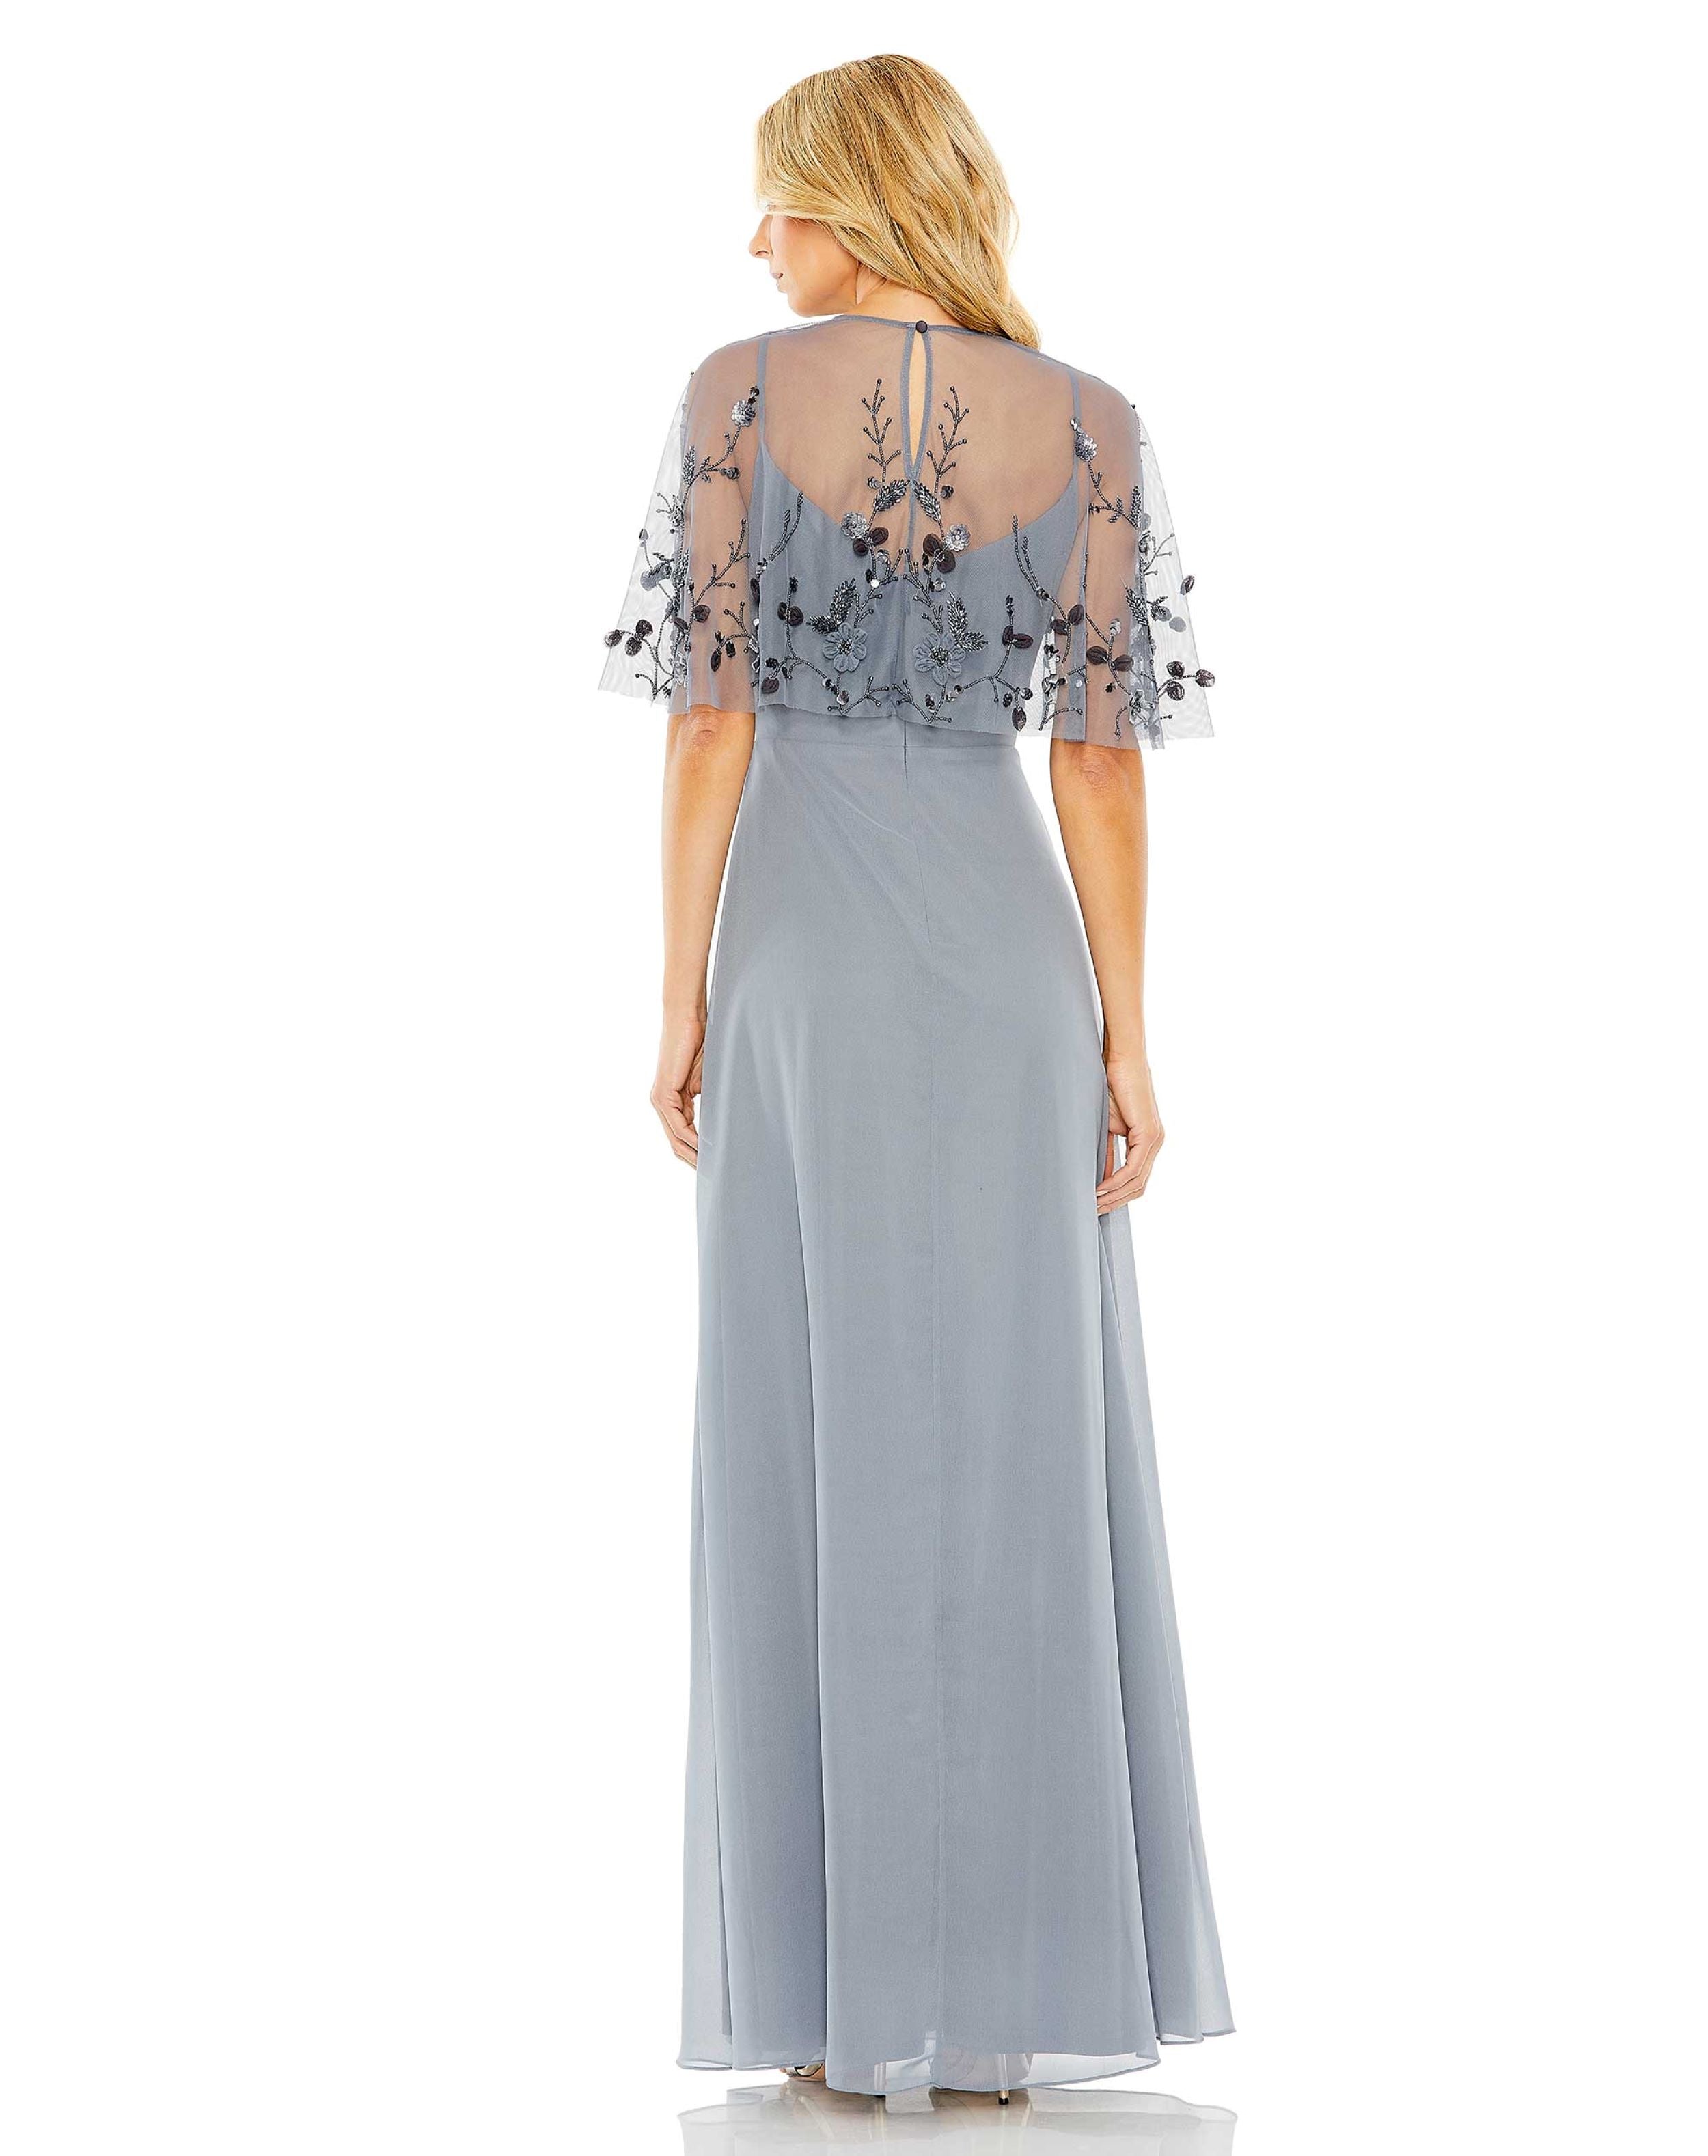 Sleeveless Dress With Embellished Cape – Mac Duggal